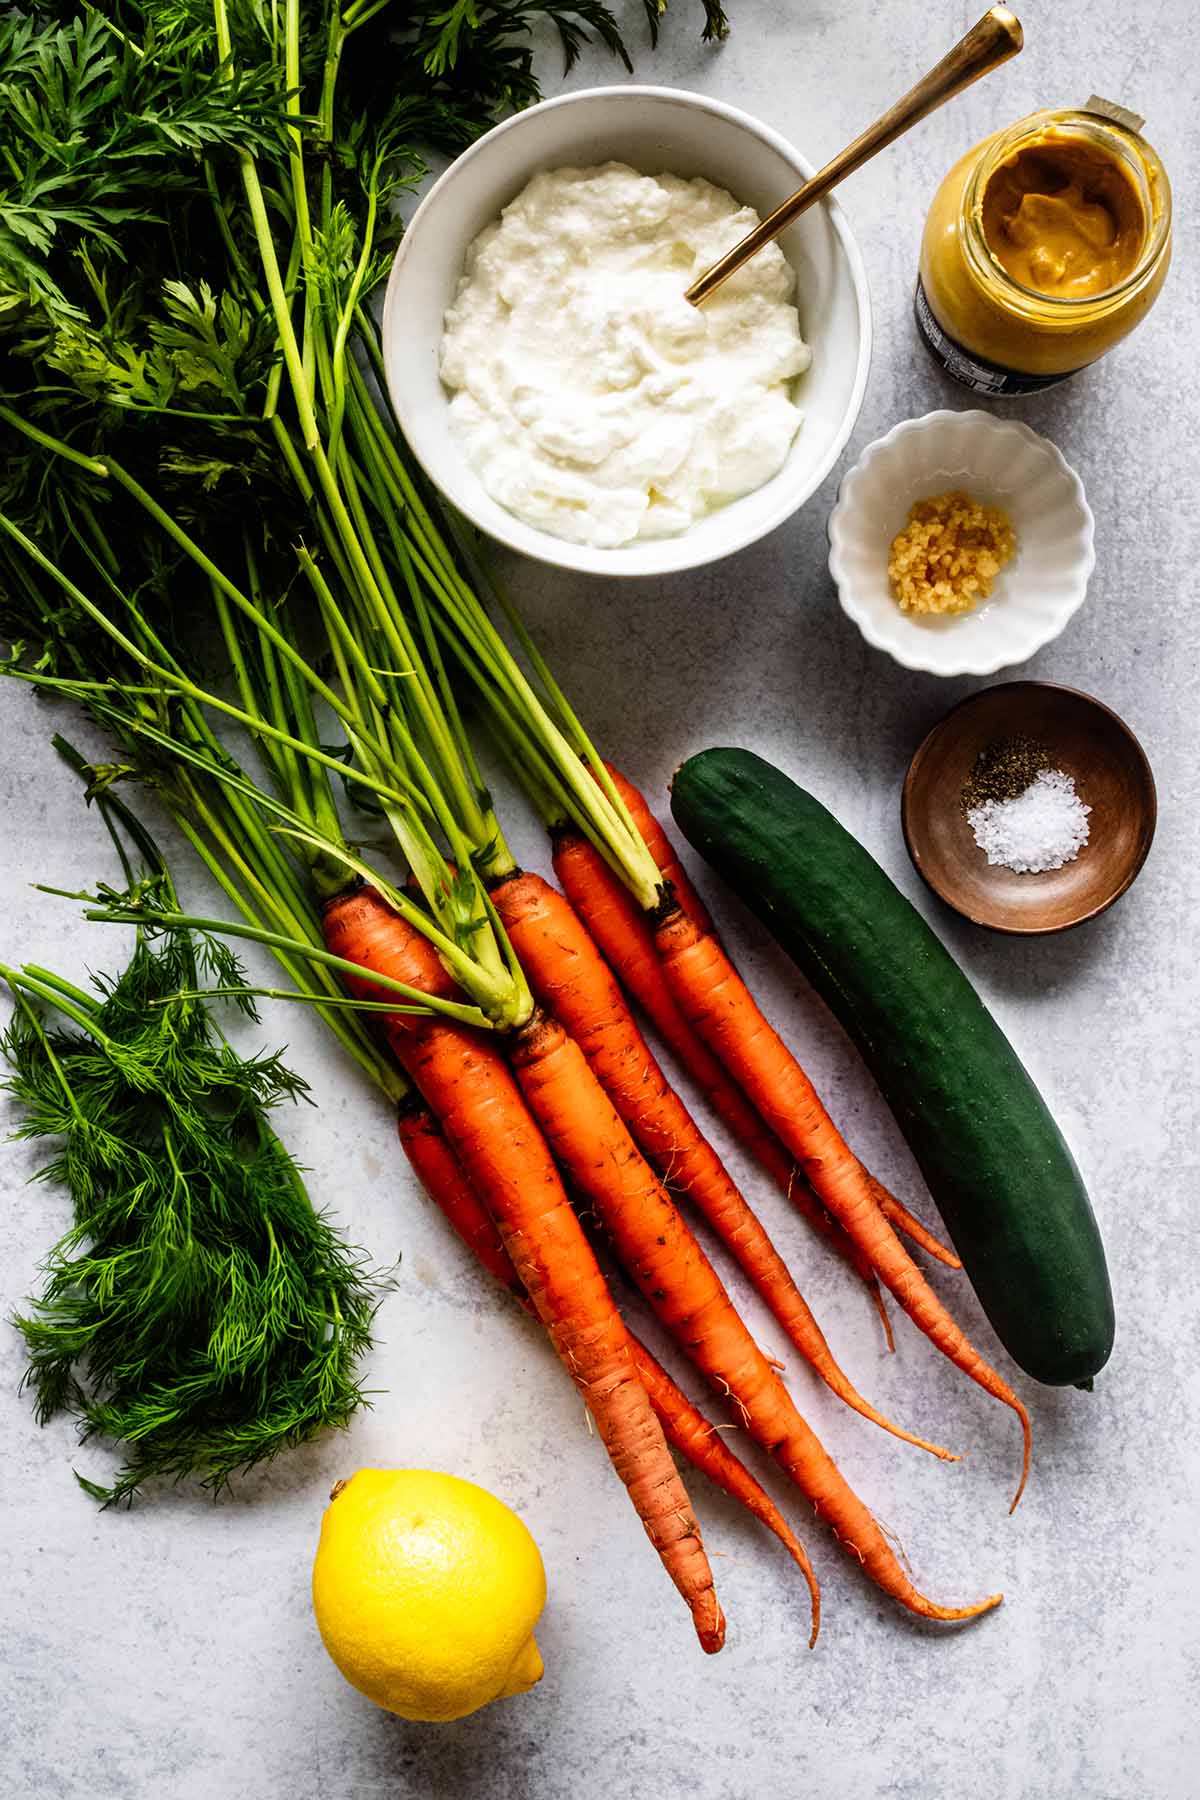 Carrot cucumber salad ingredients.